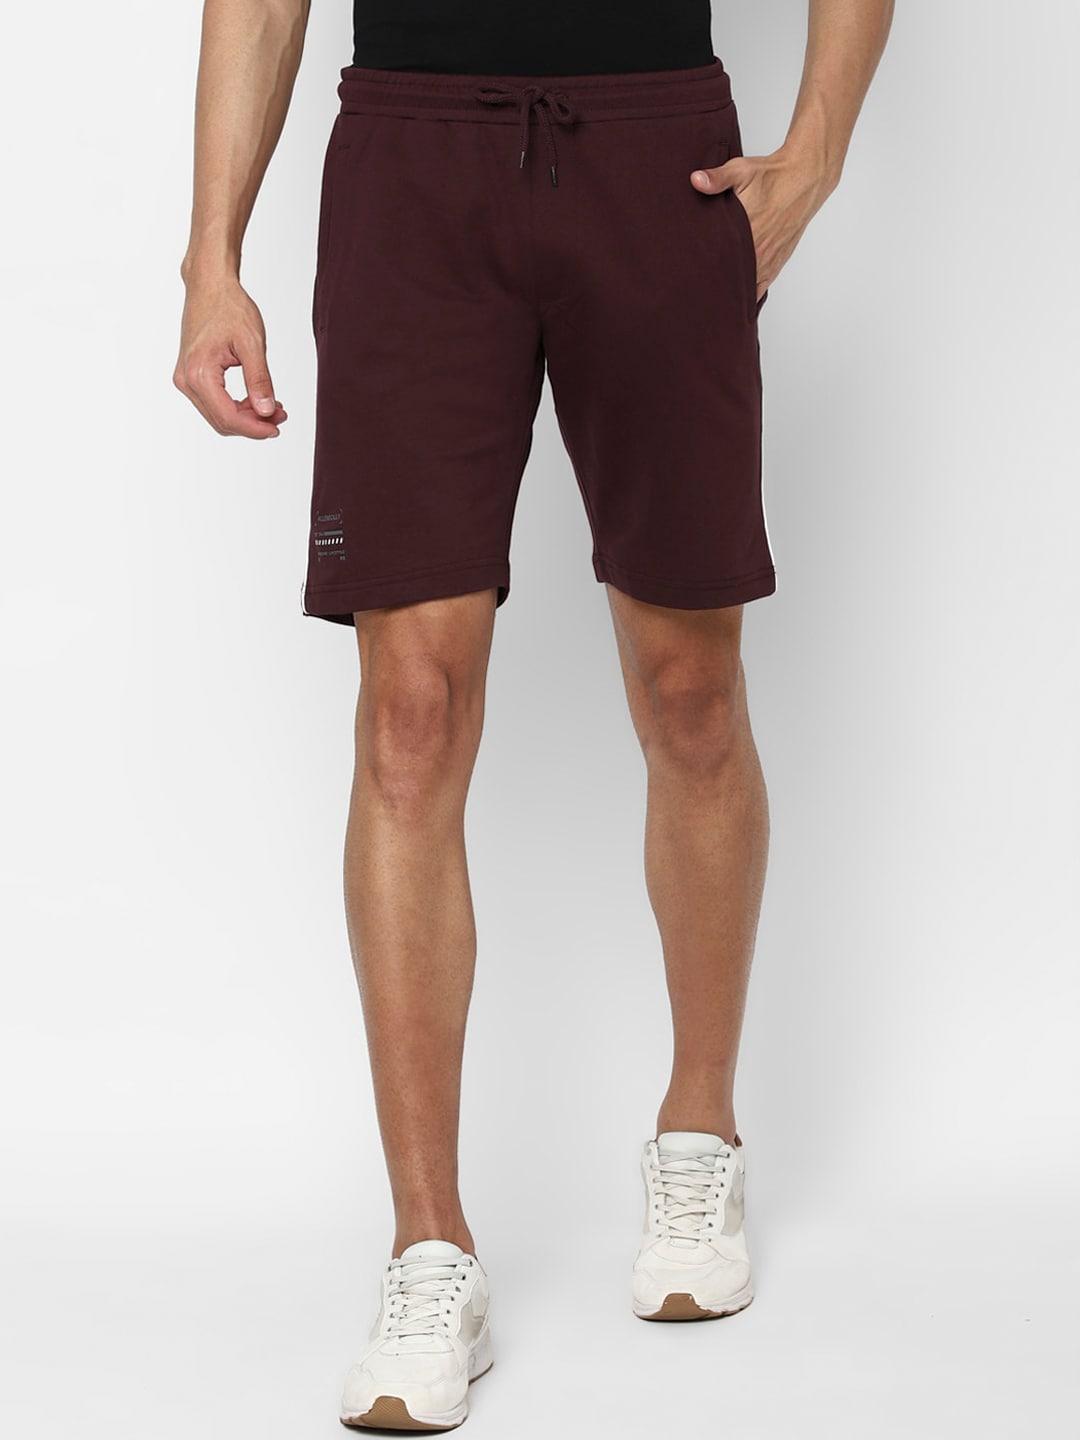 allen solly sport men maroon slim fit sports shorts